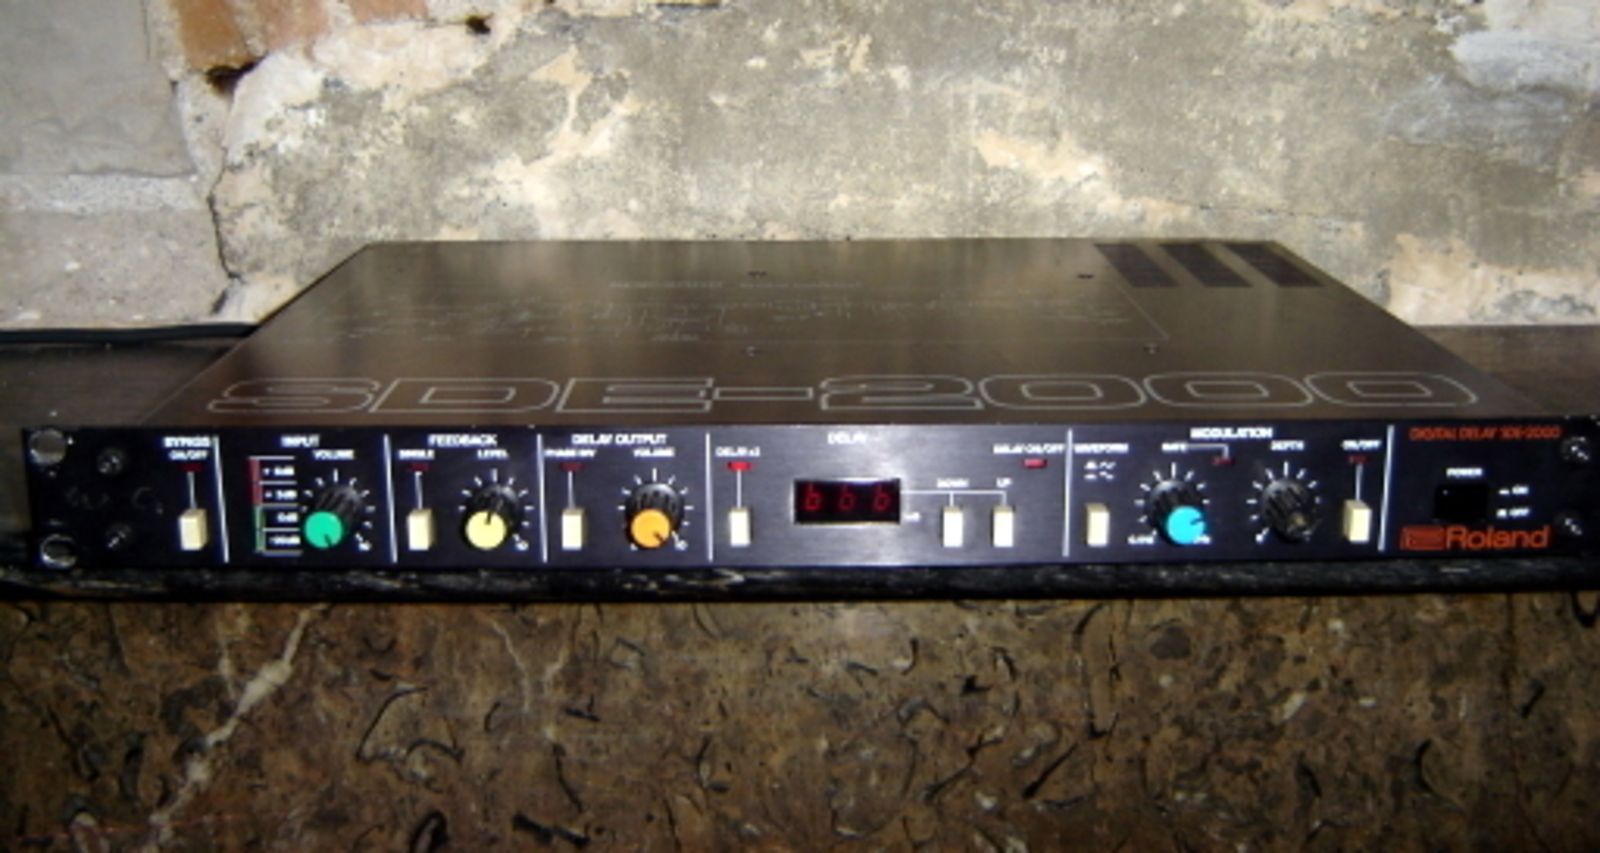 Roland SDE-2000 image (#12527) - Audiofanzine